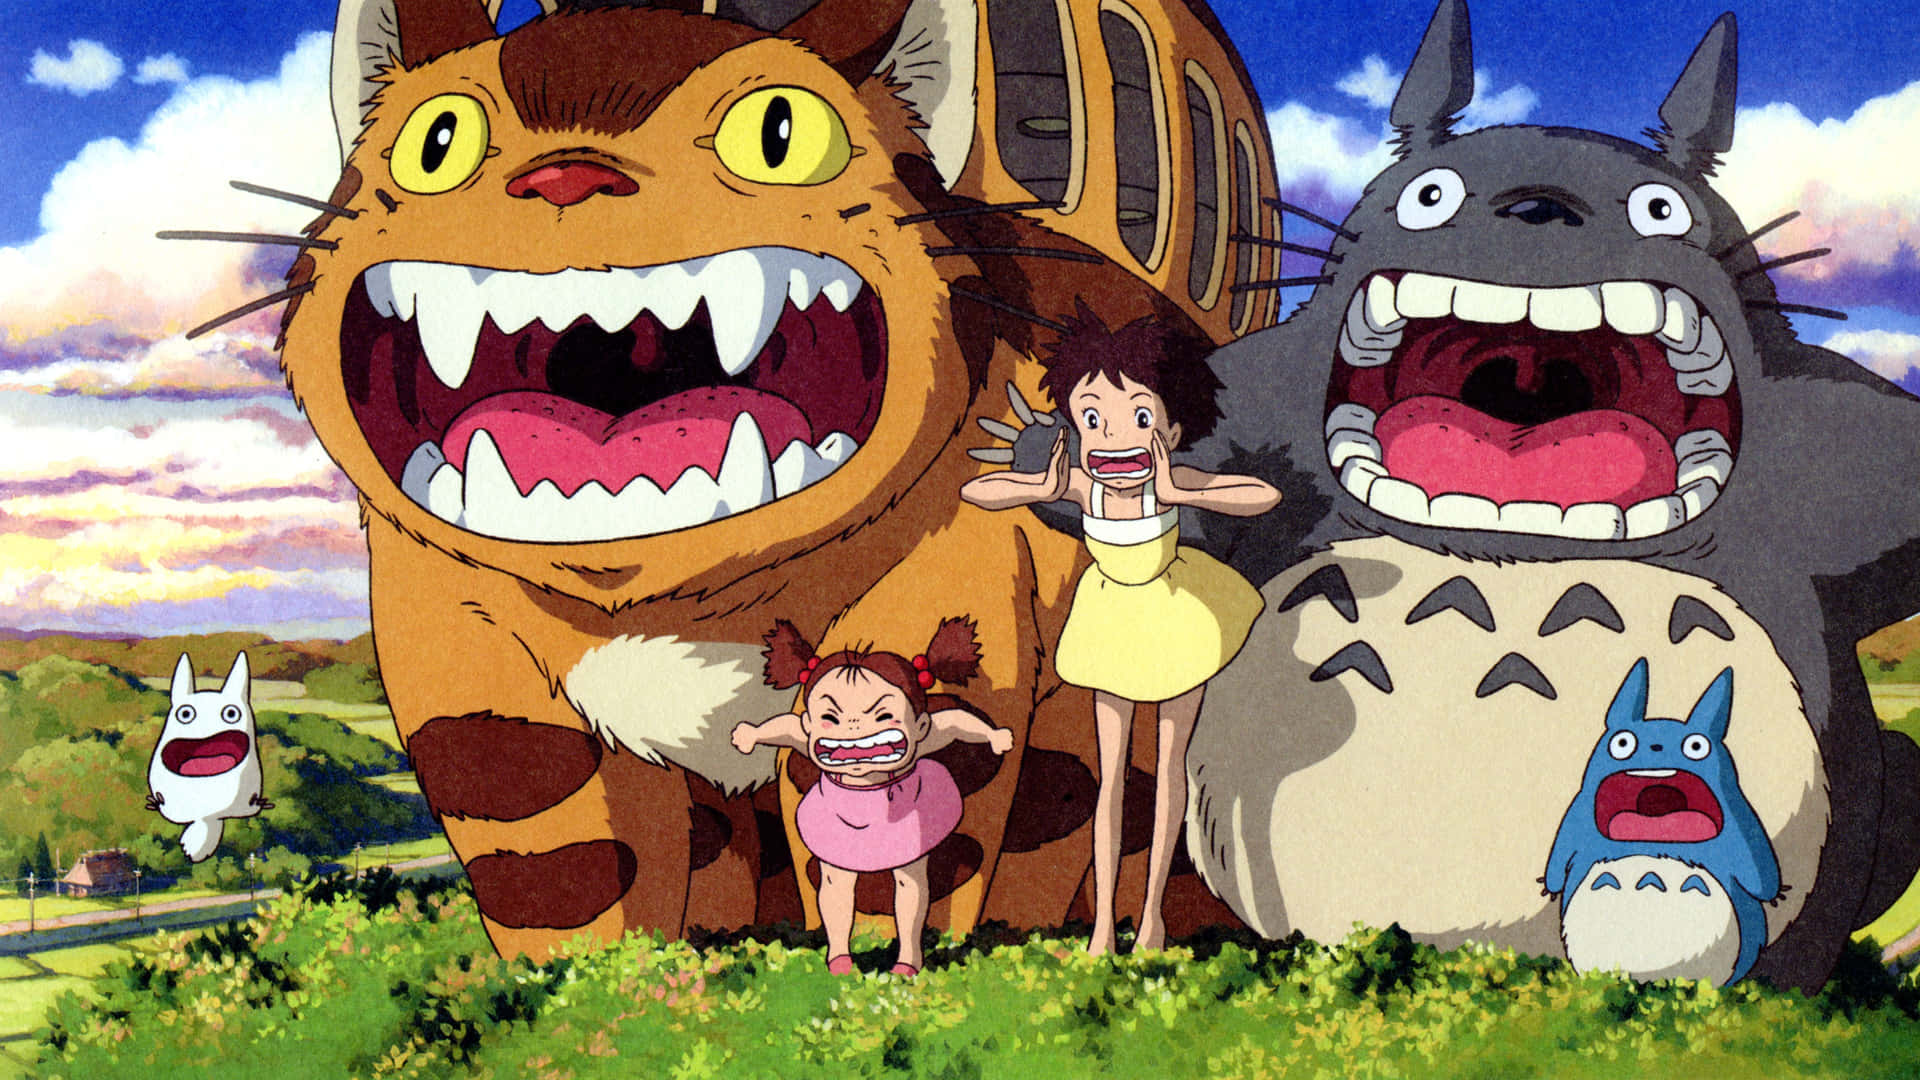 Japanese fantasy movie classic "My Neighbor Totoro"